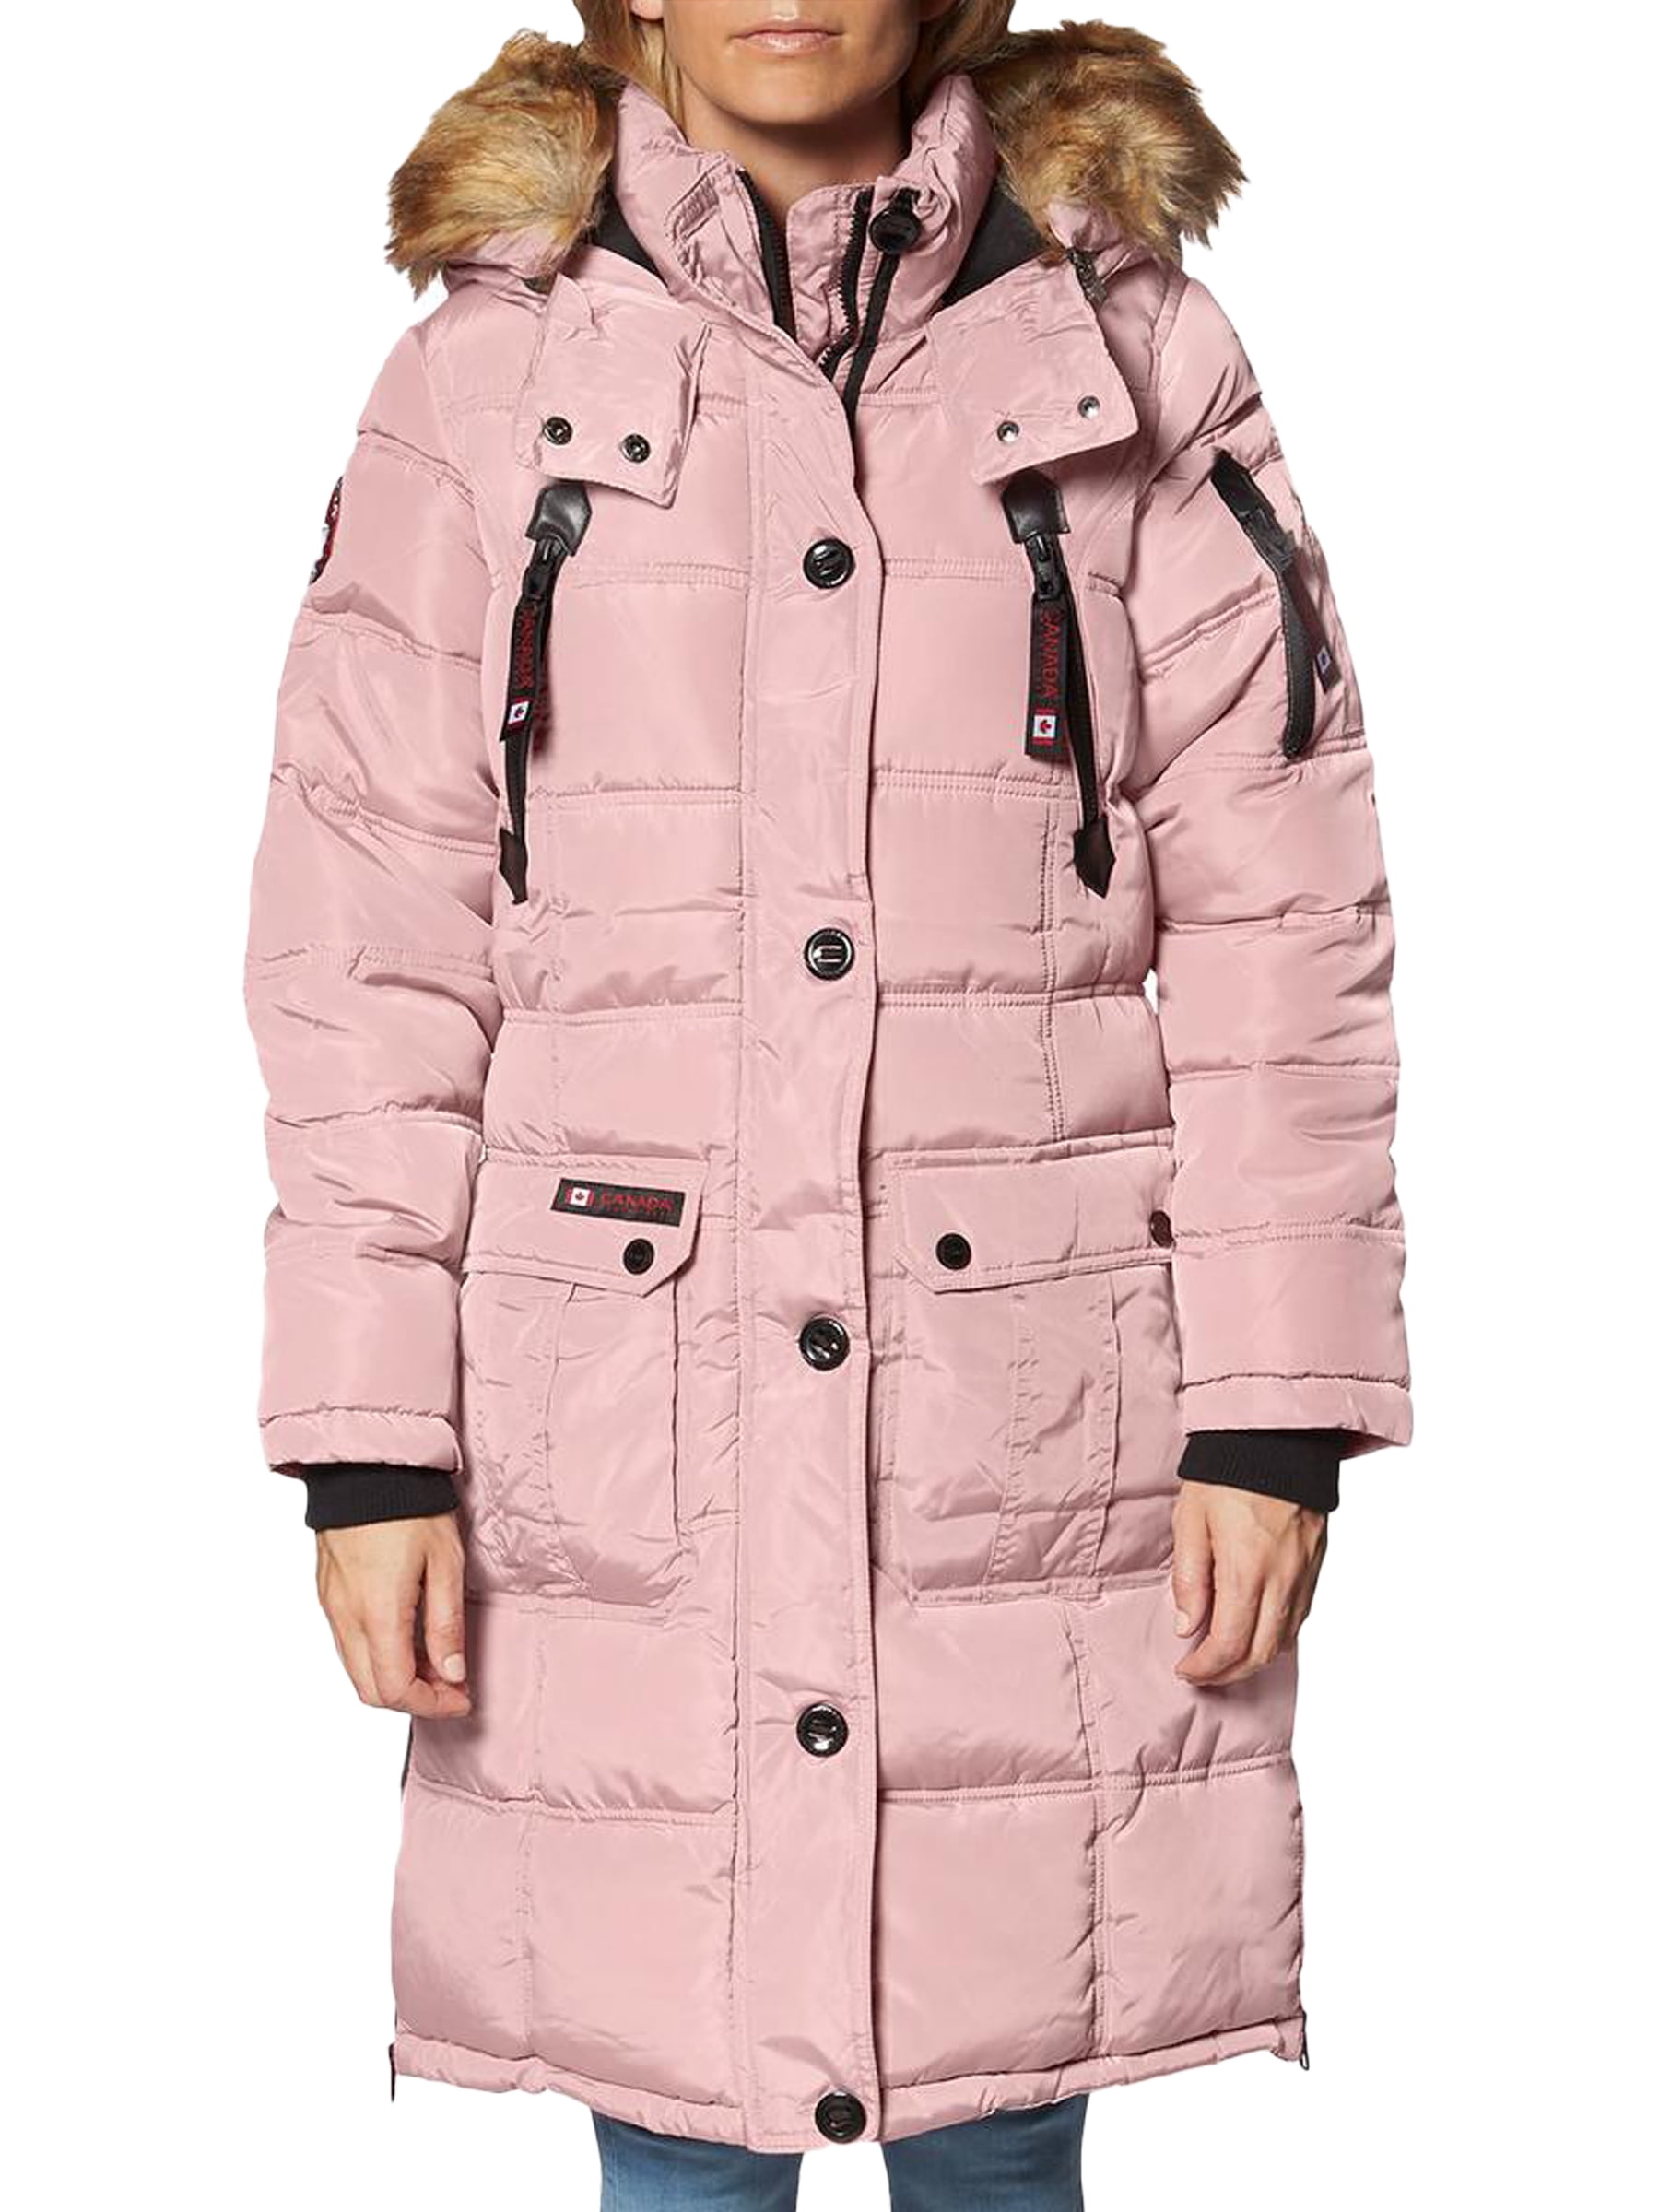 New Womens Brave Soul Parka Fur Hooded Padded Jacket Ladies Coat Size S M L XL 8 